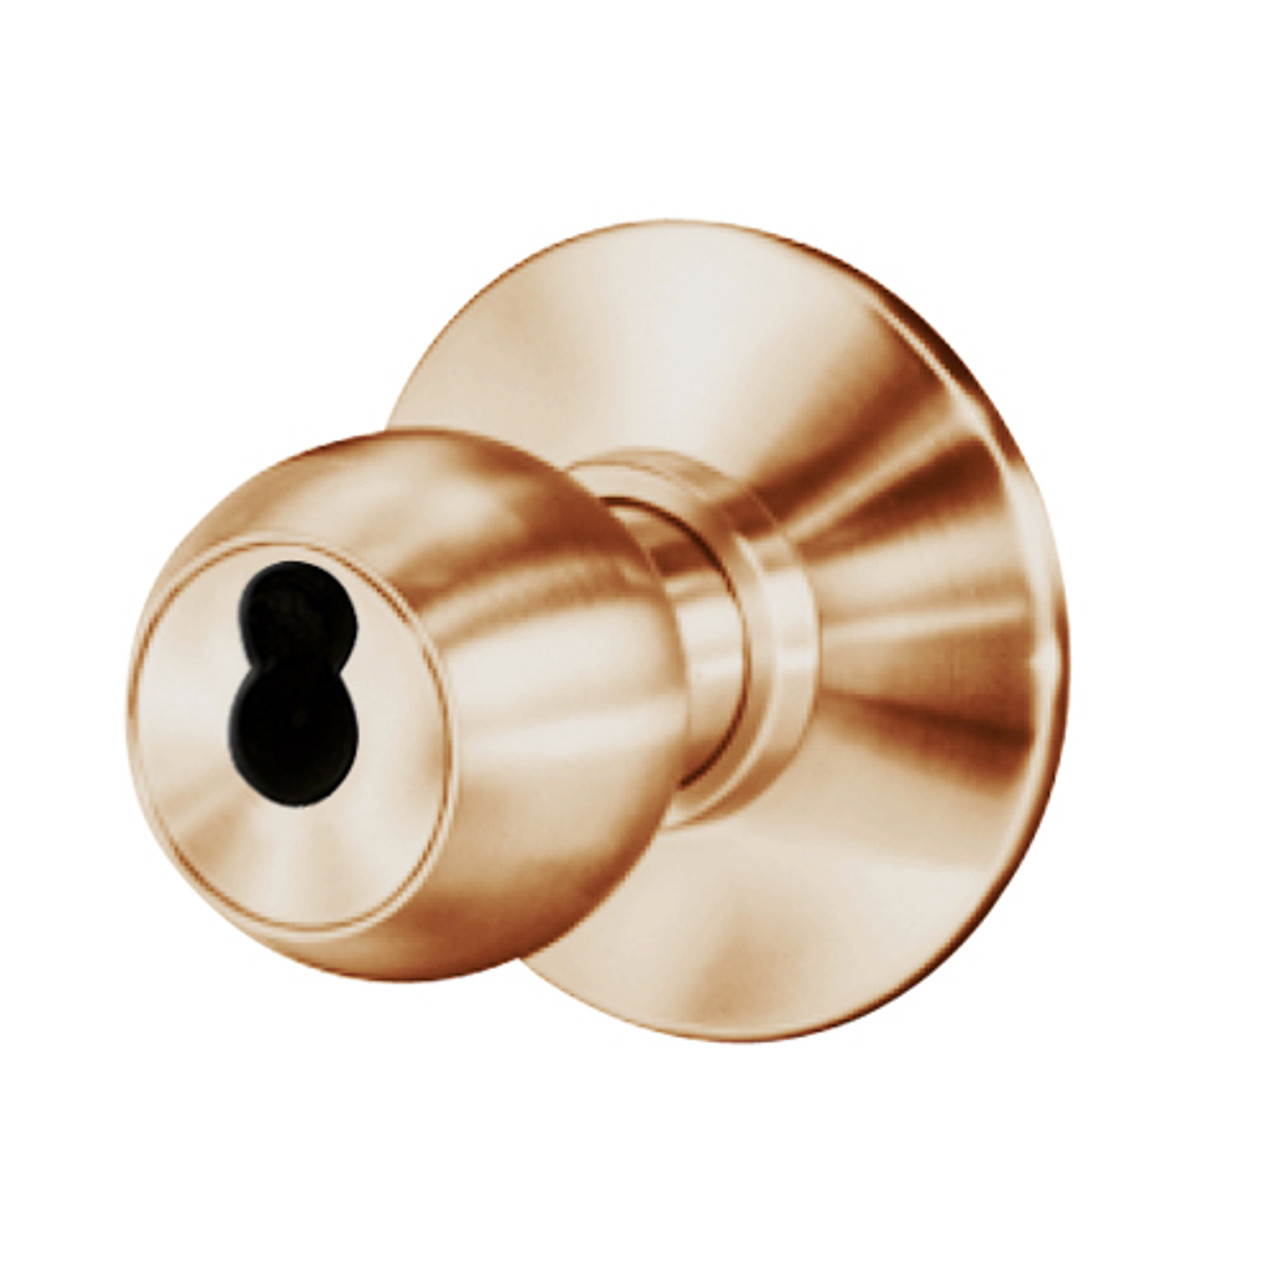 8K37B4DSTK612 Best 8K Series Office Heavy Duty Cylindrical Knob Locks with Round Style in Satin Bronze